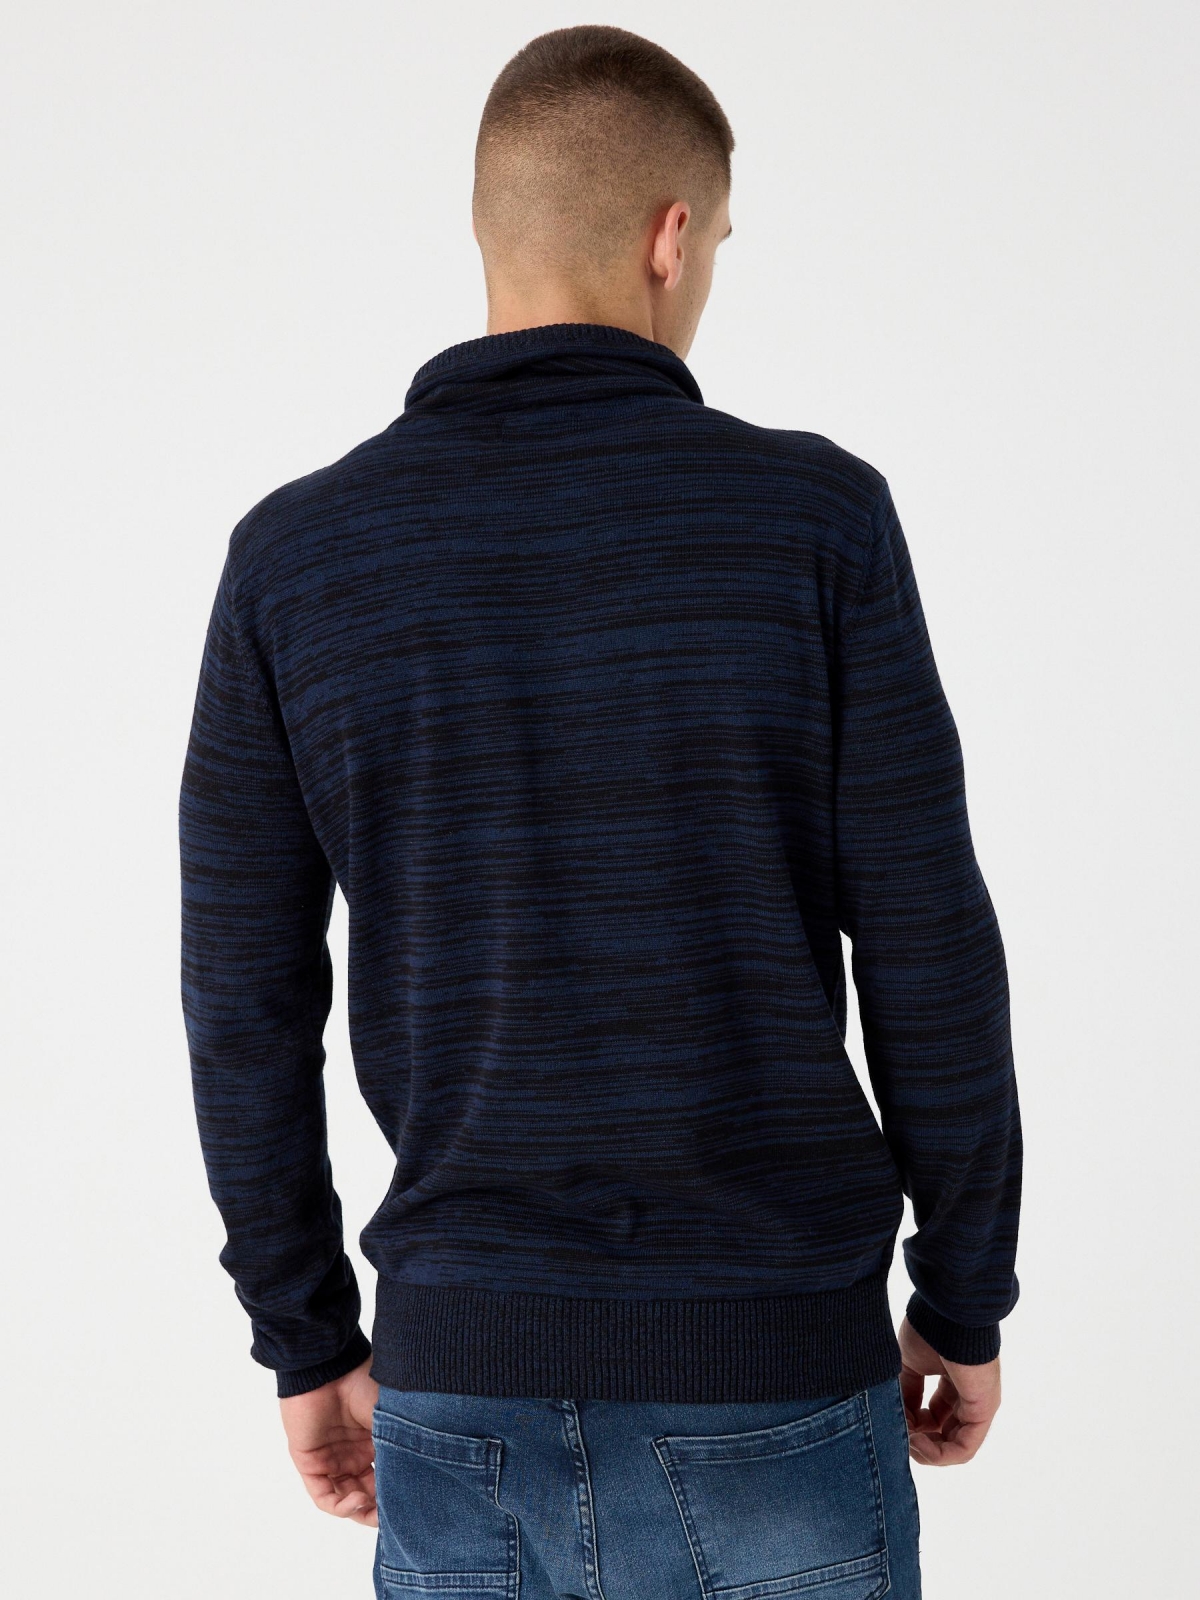 Fleece turtleneck sweater blue middle back view